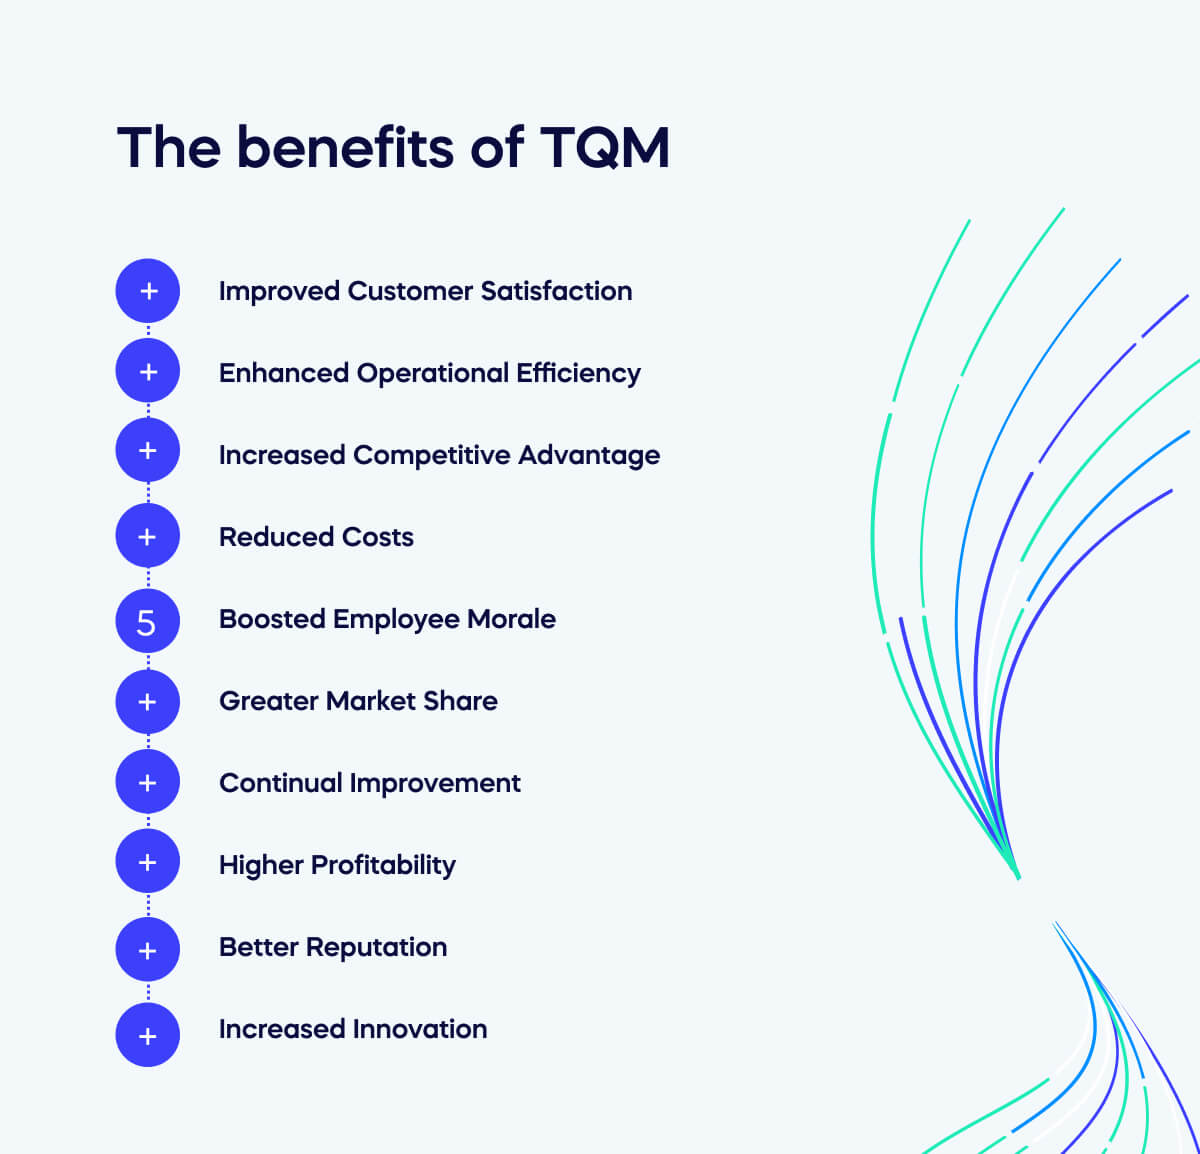 The benefits of TQM